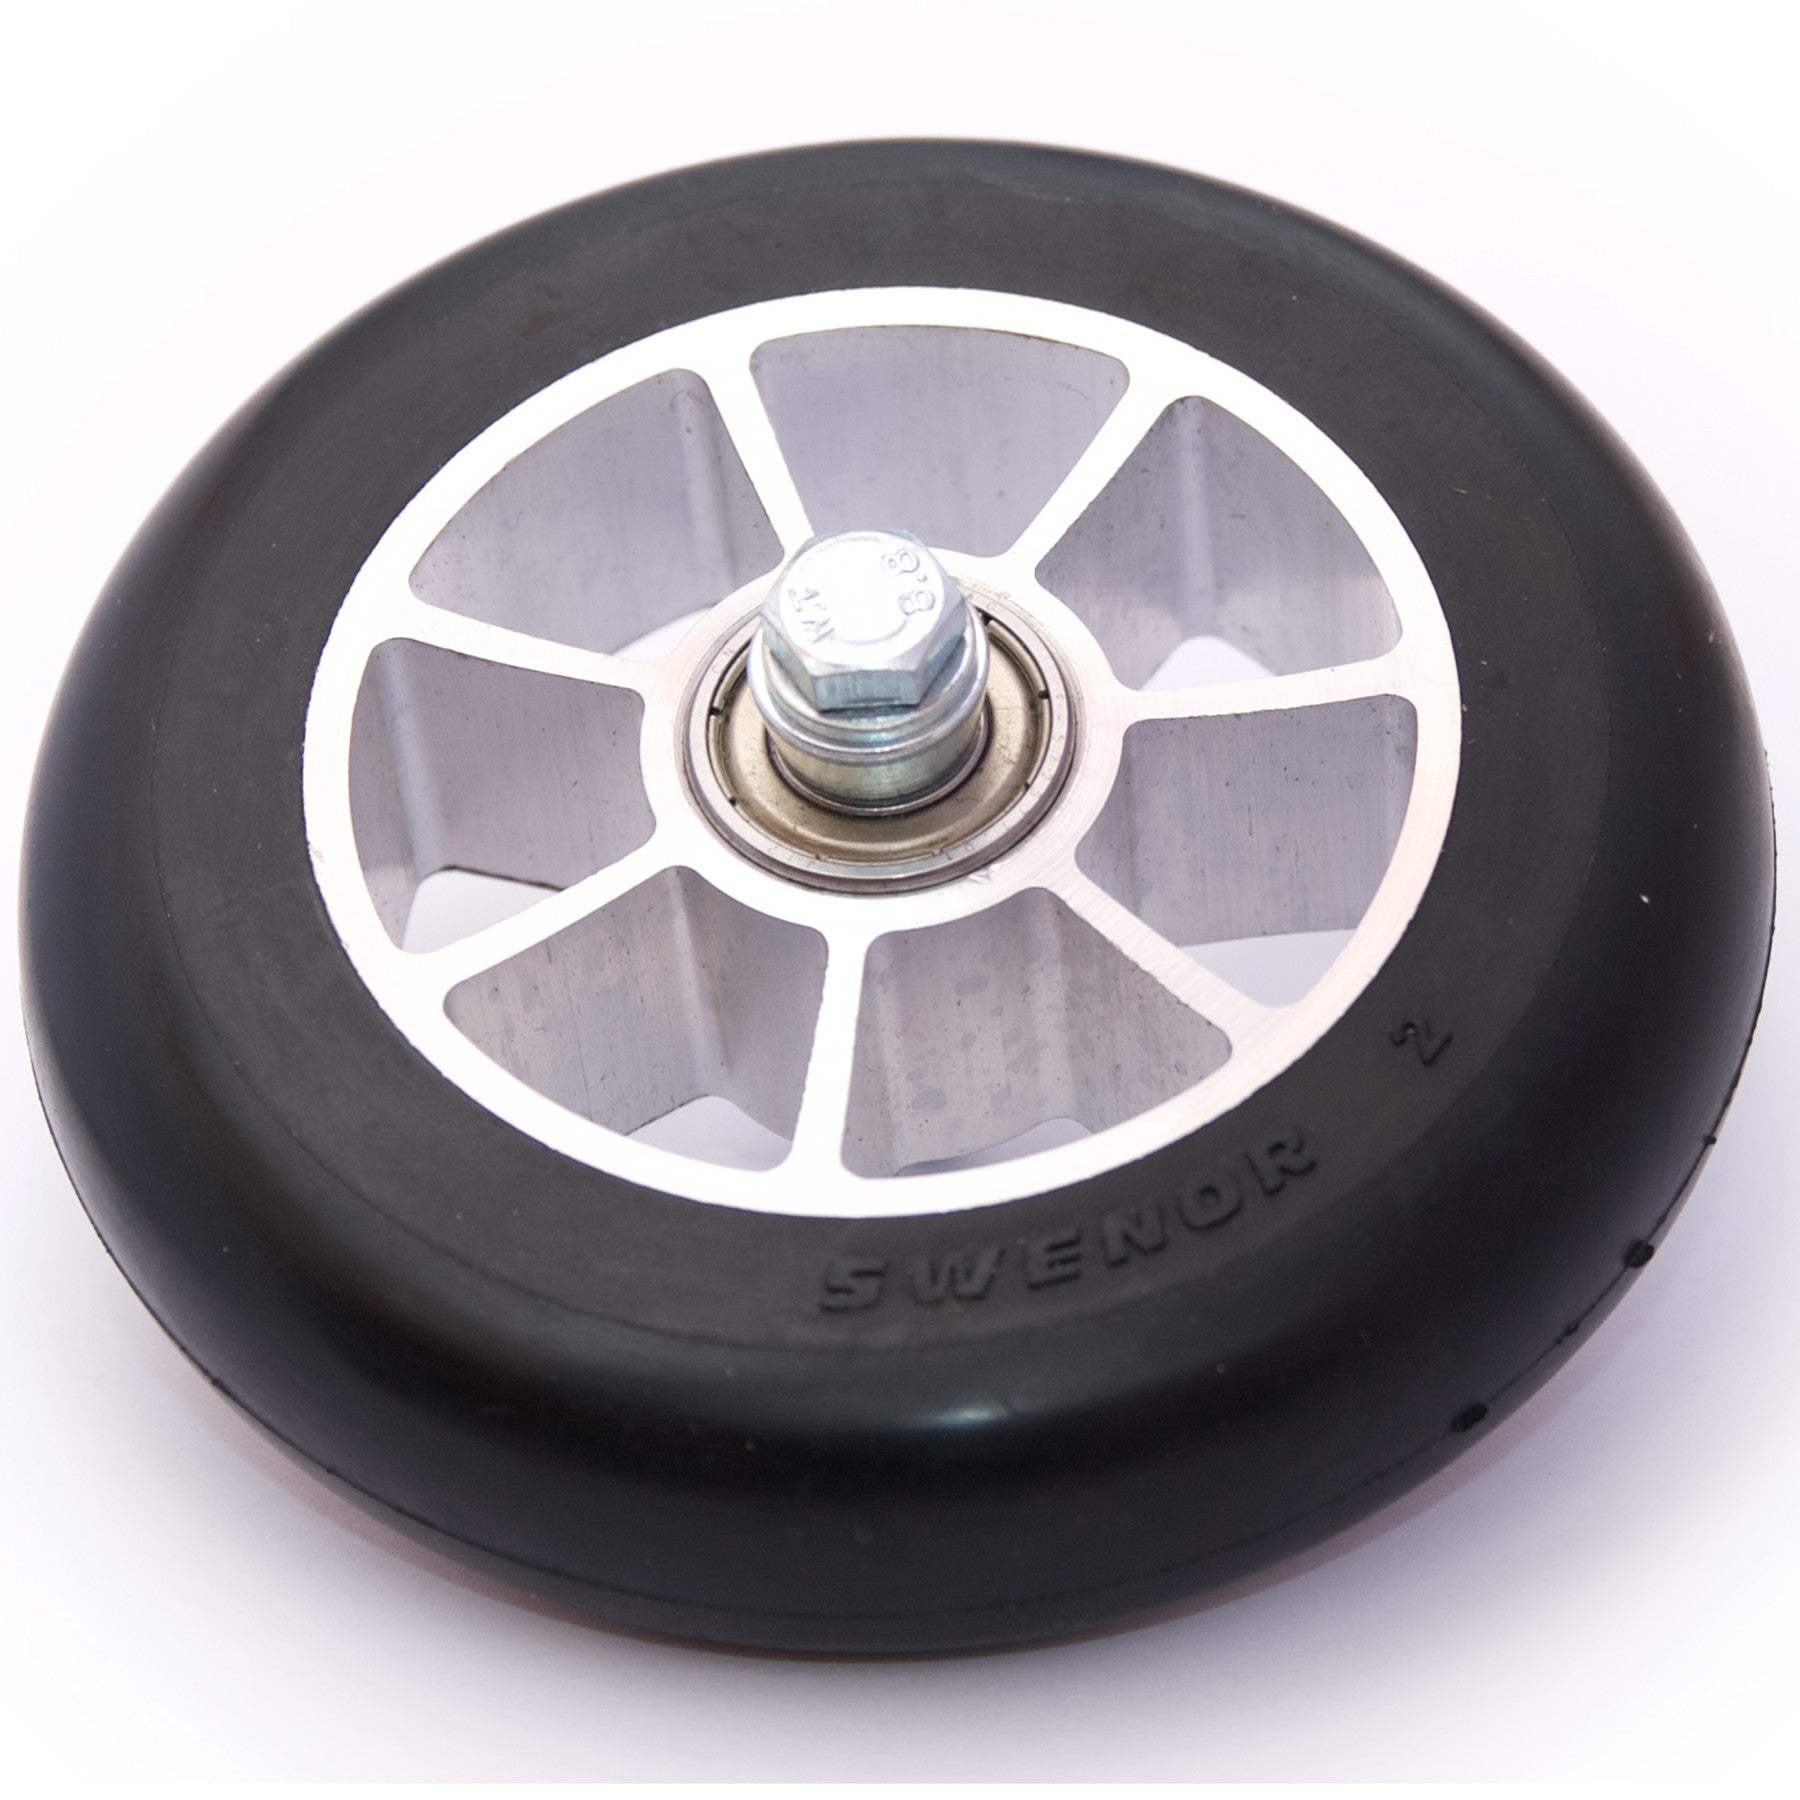 Swenor Skate Wheel Replacement - 0